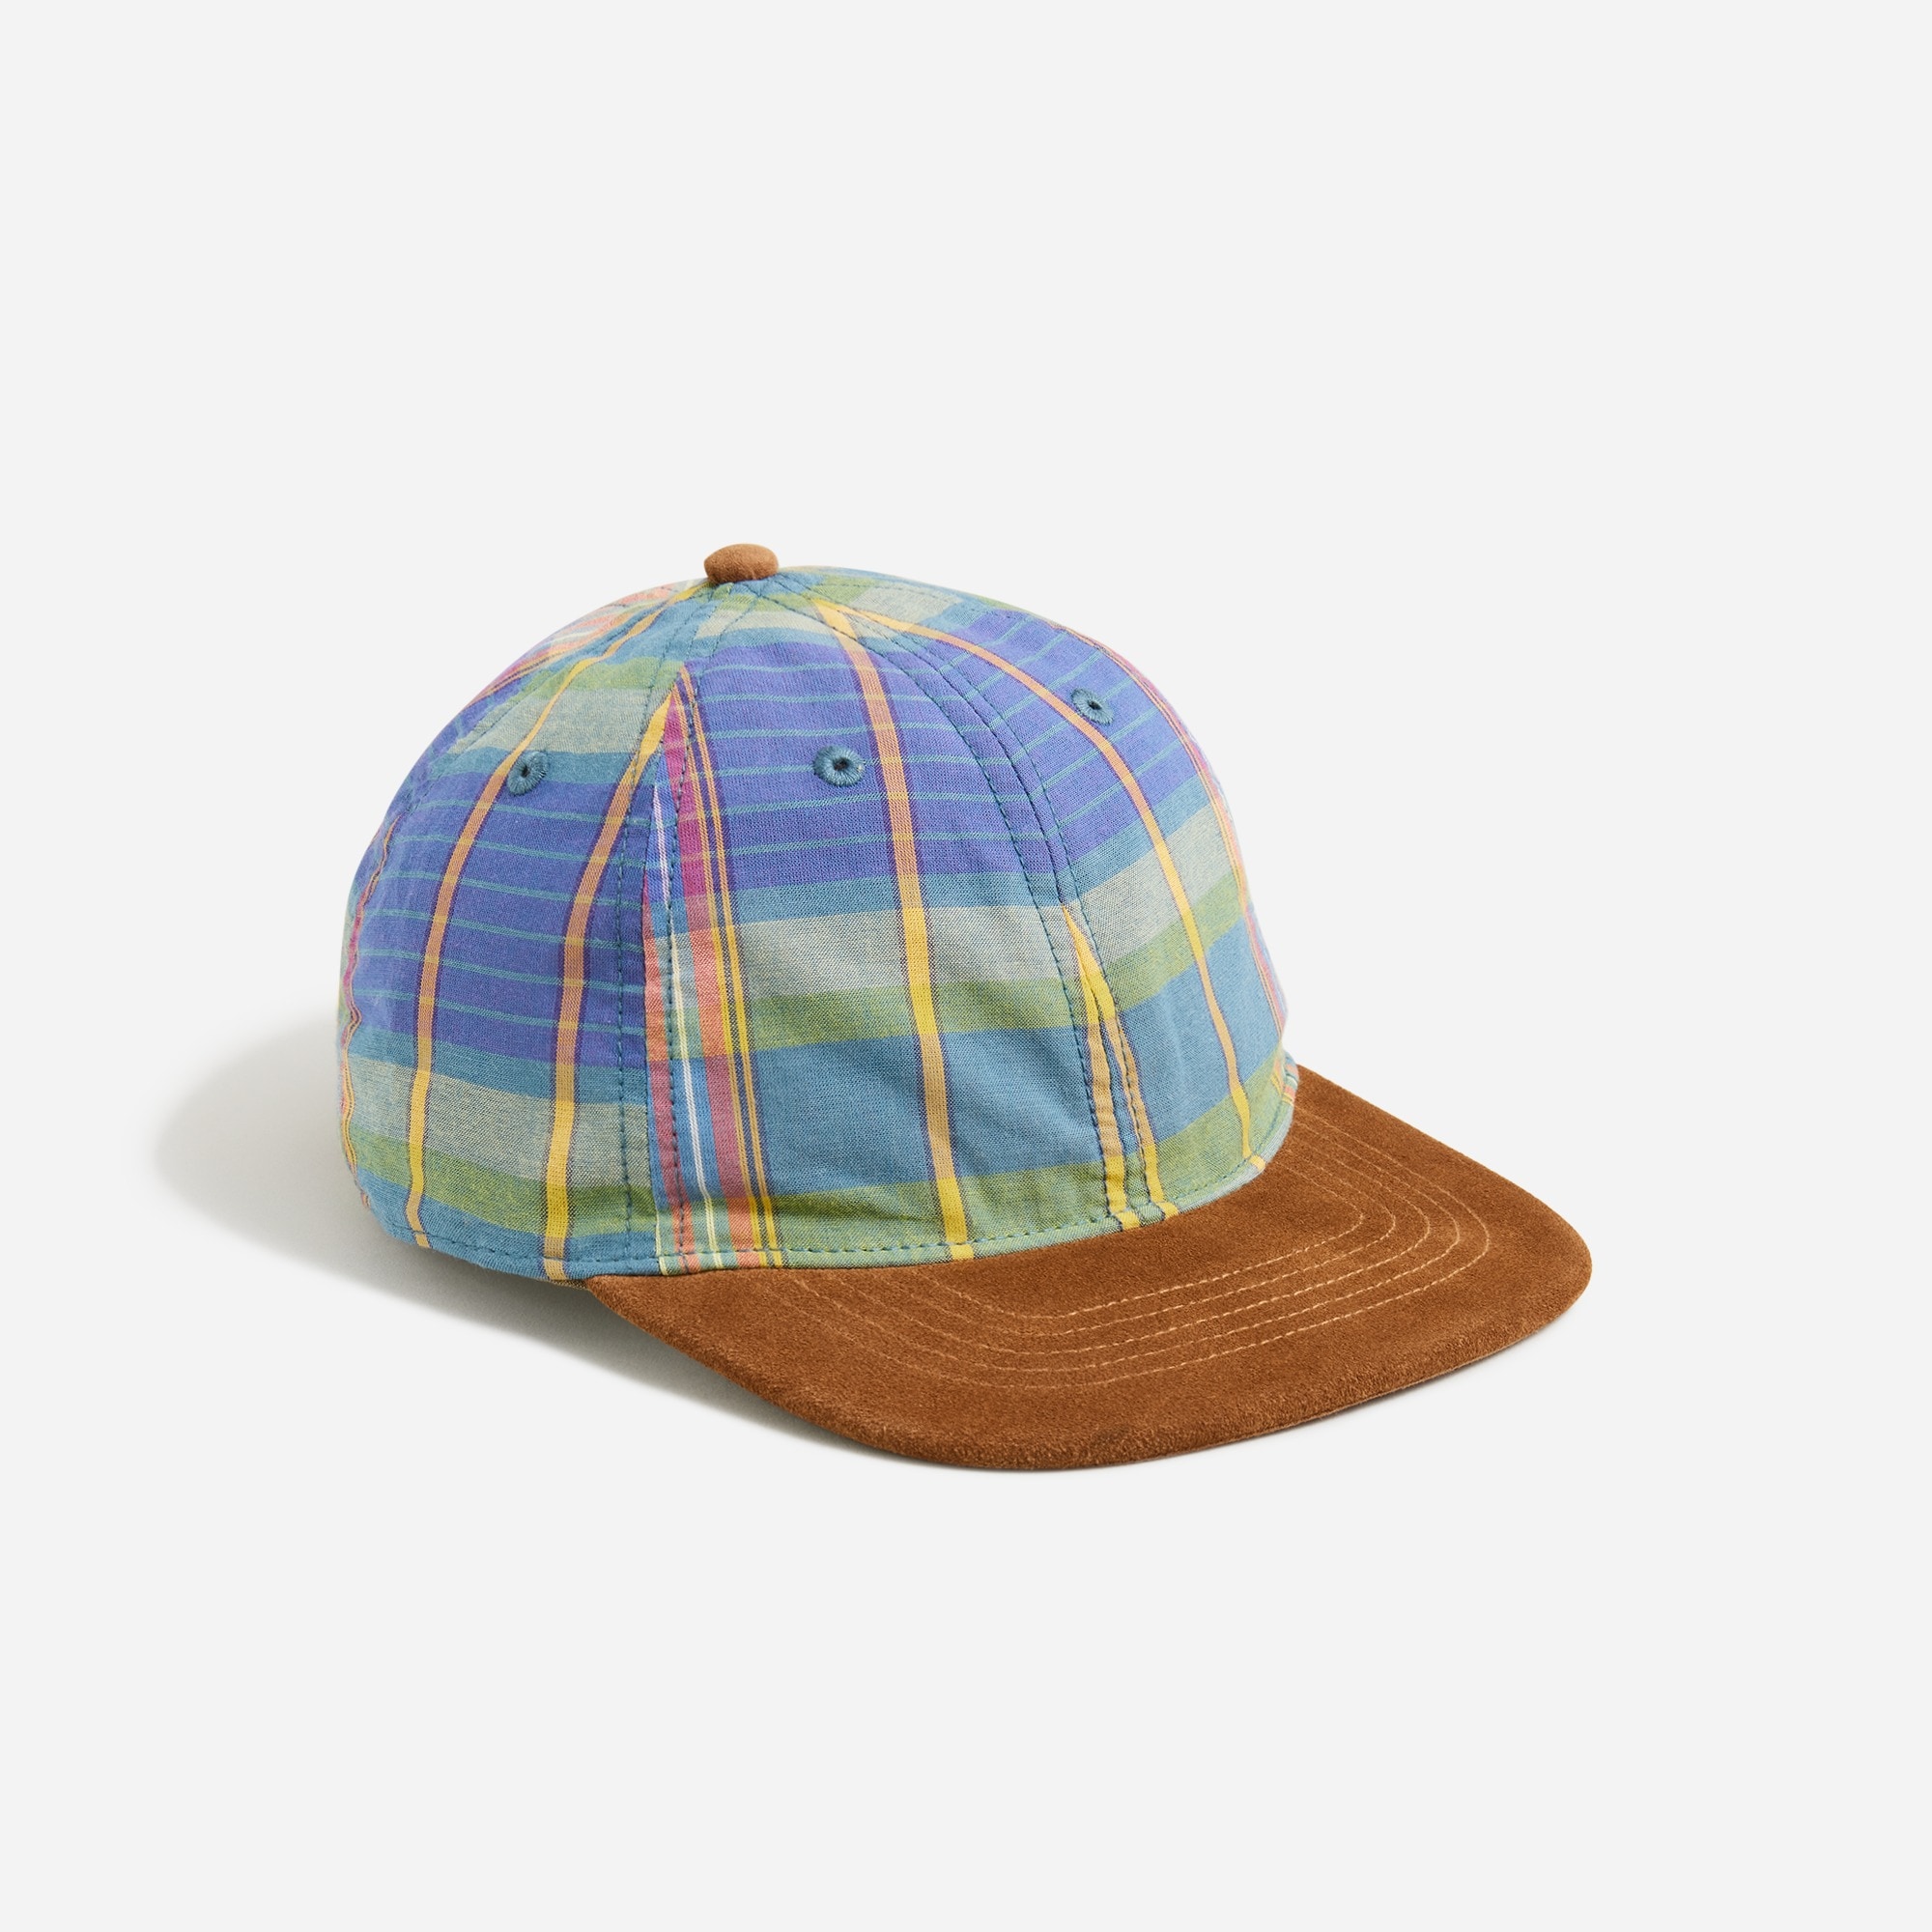  Baseball cap in plaid with suede brim